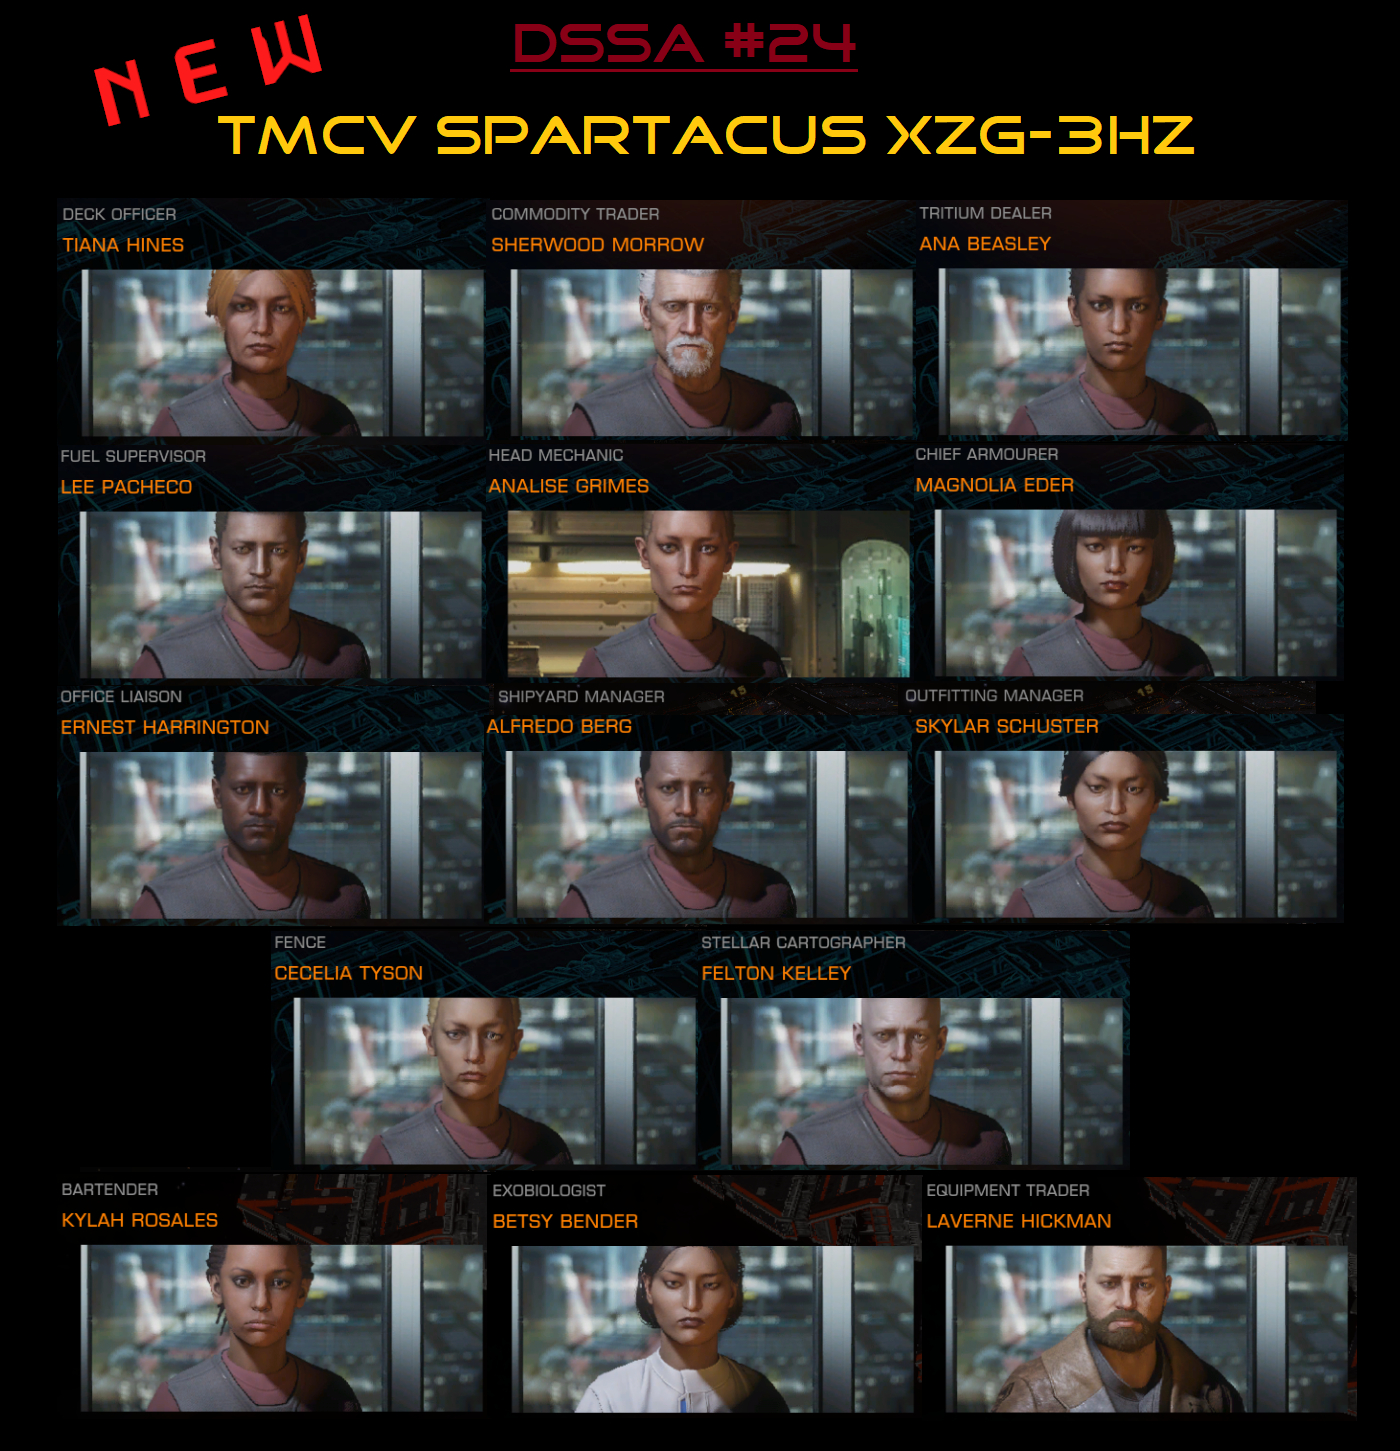 Spartacus crew ody2.jpeg